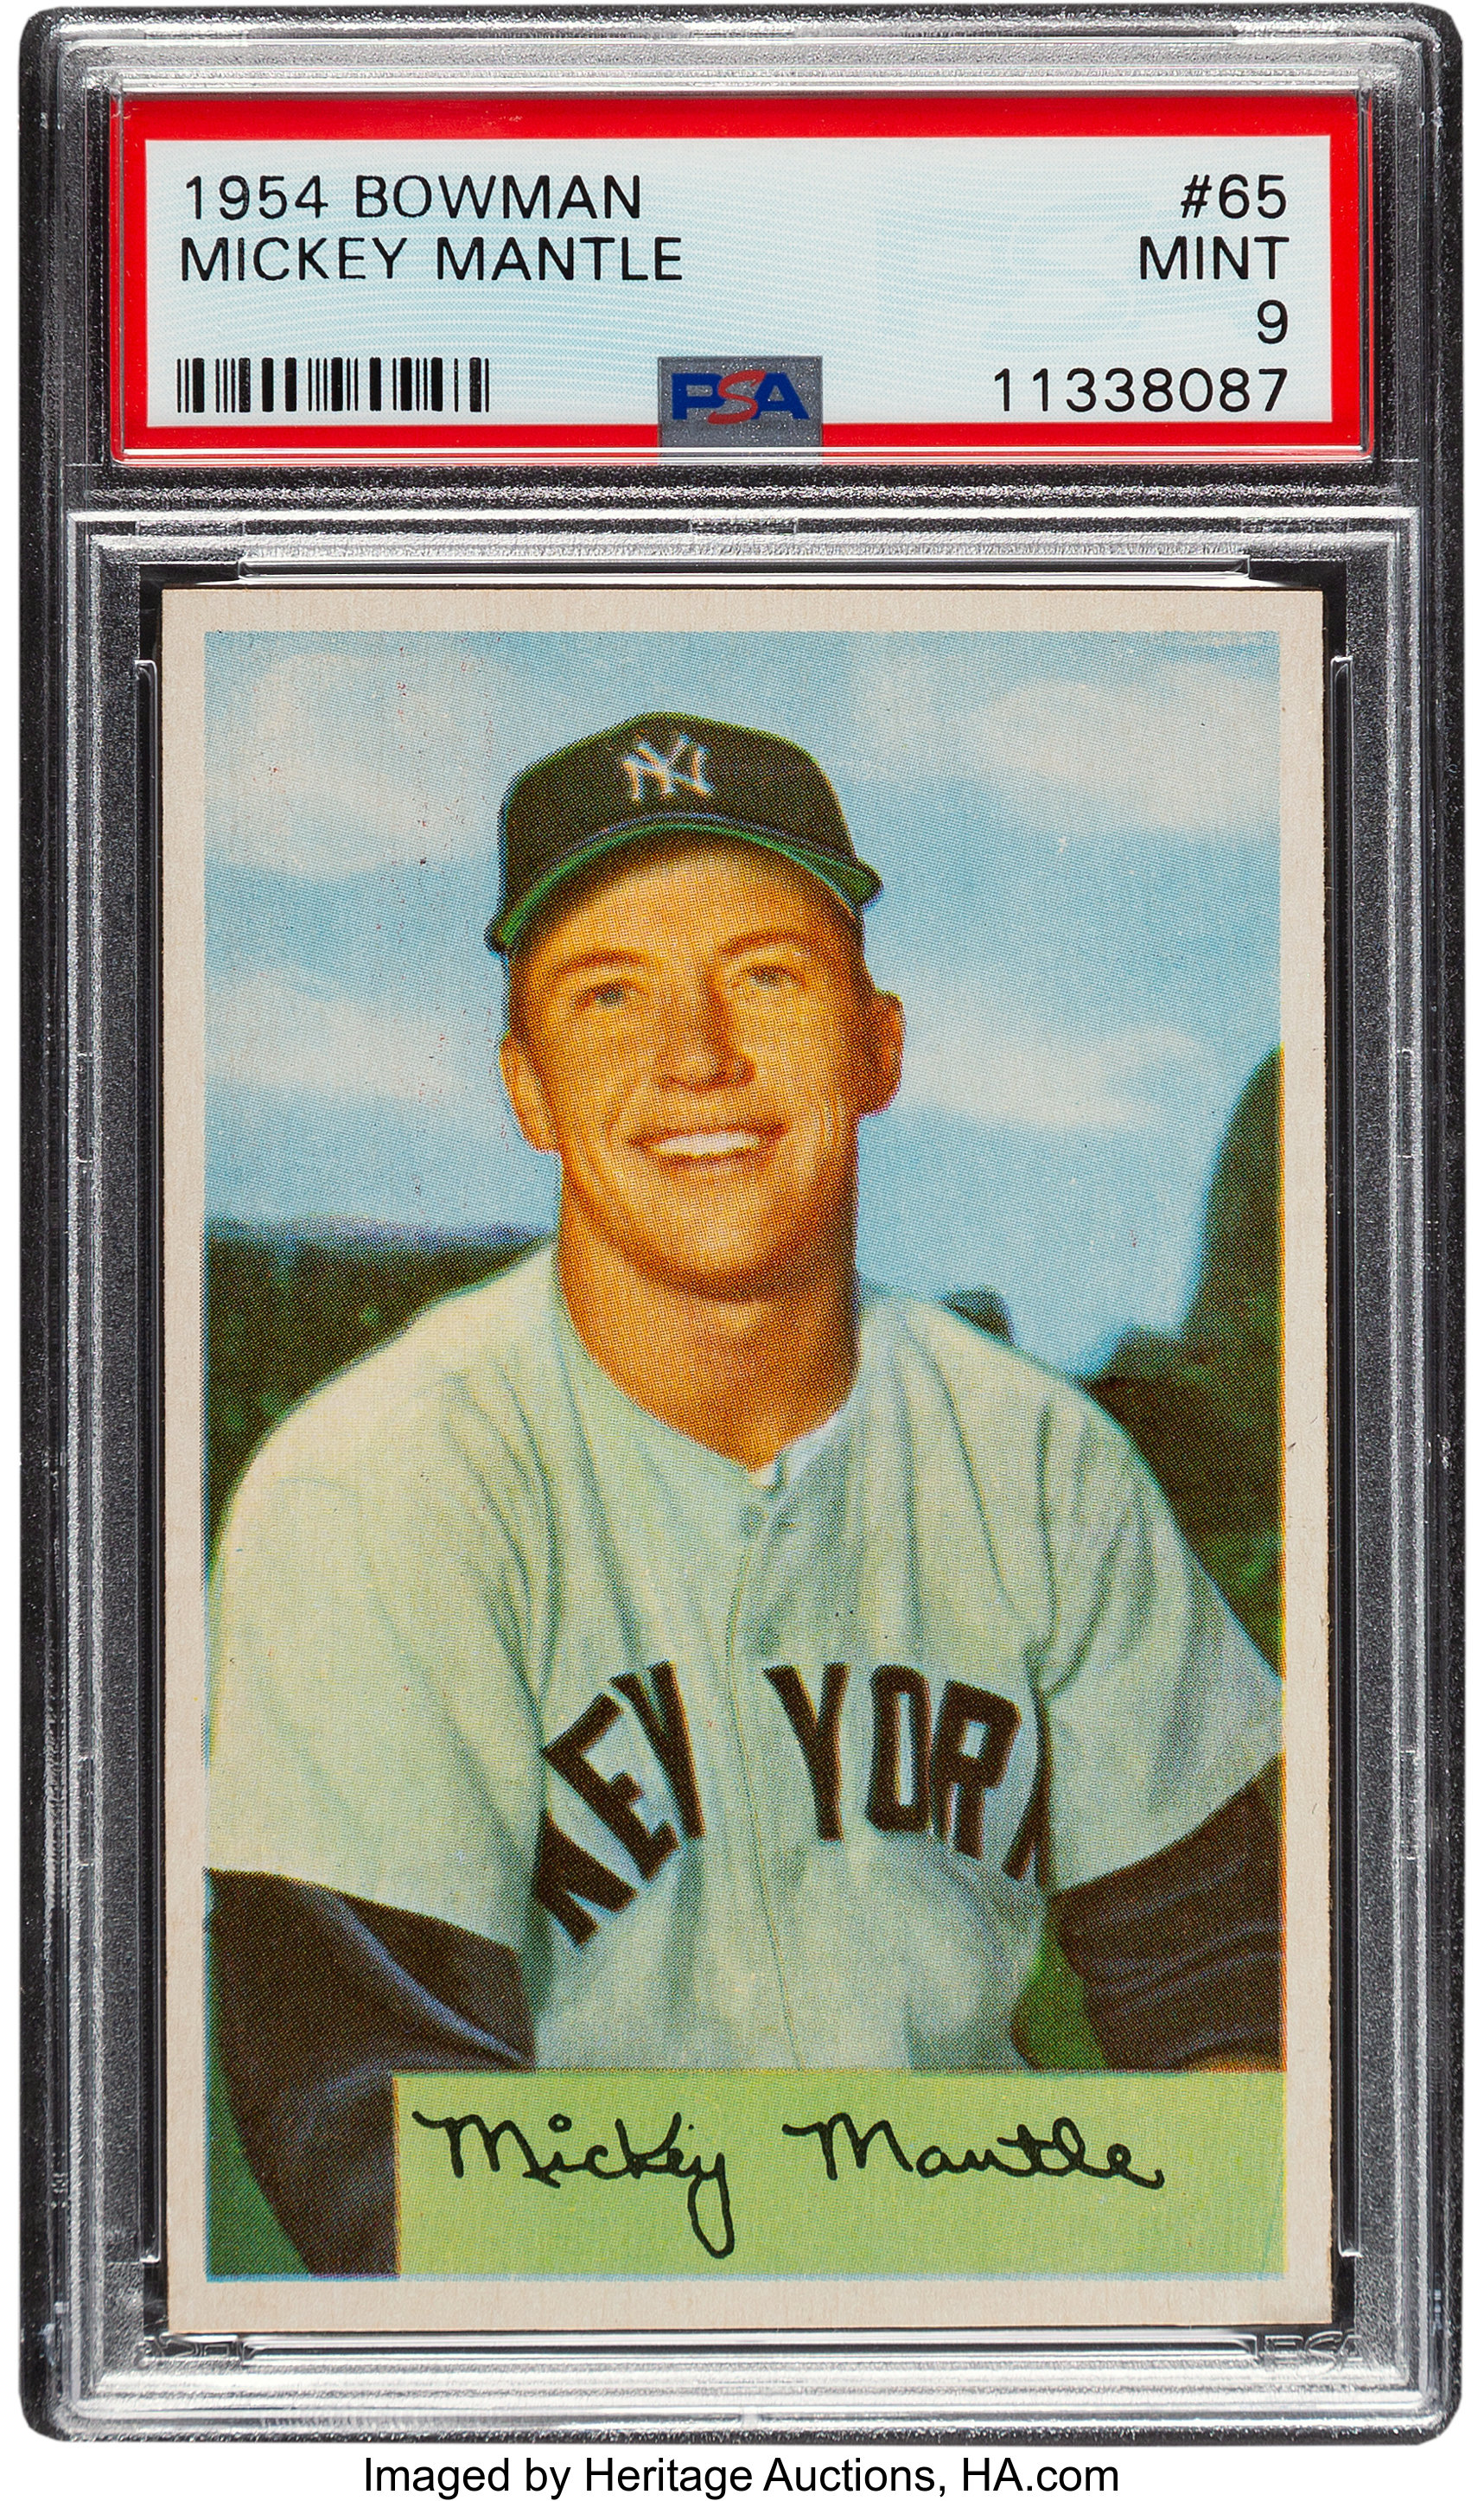 1952 Topps Mickey Mantle #311 PSA NM 7. Baseball Cards Singles, Lot  #53840